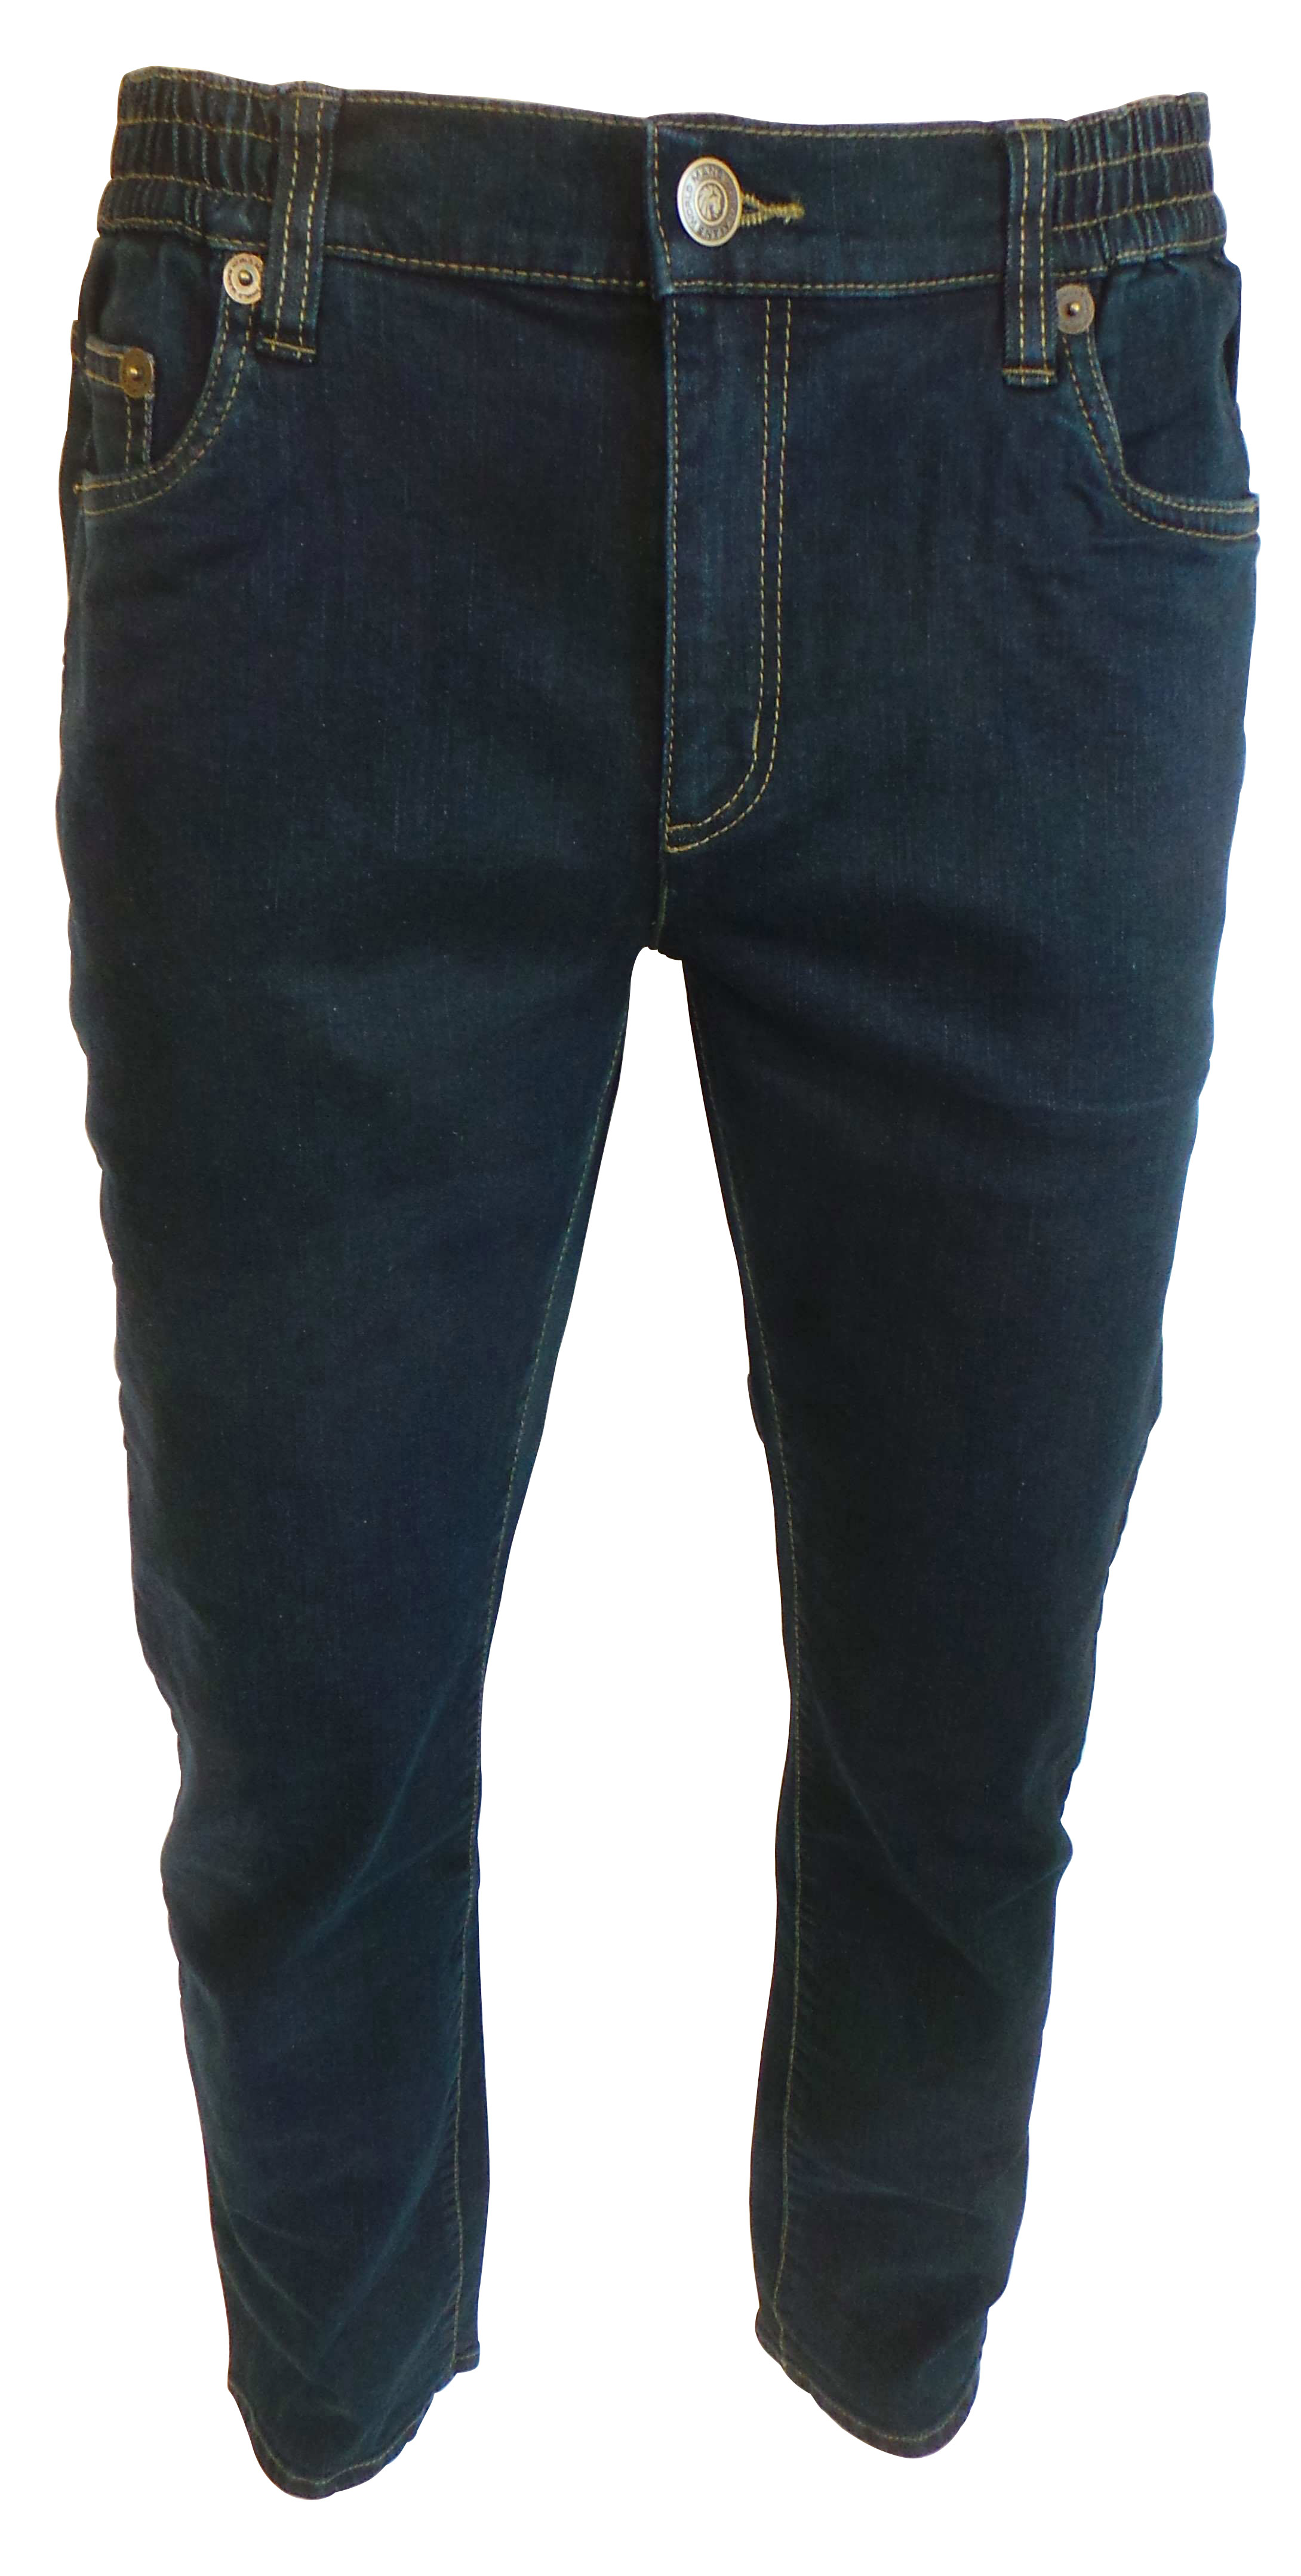 Wholesale Joblot of 10 Mens Mixed Trousers - Jeans, Joggers Etc